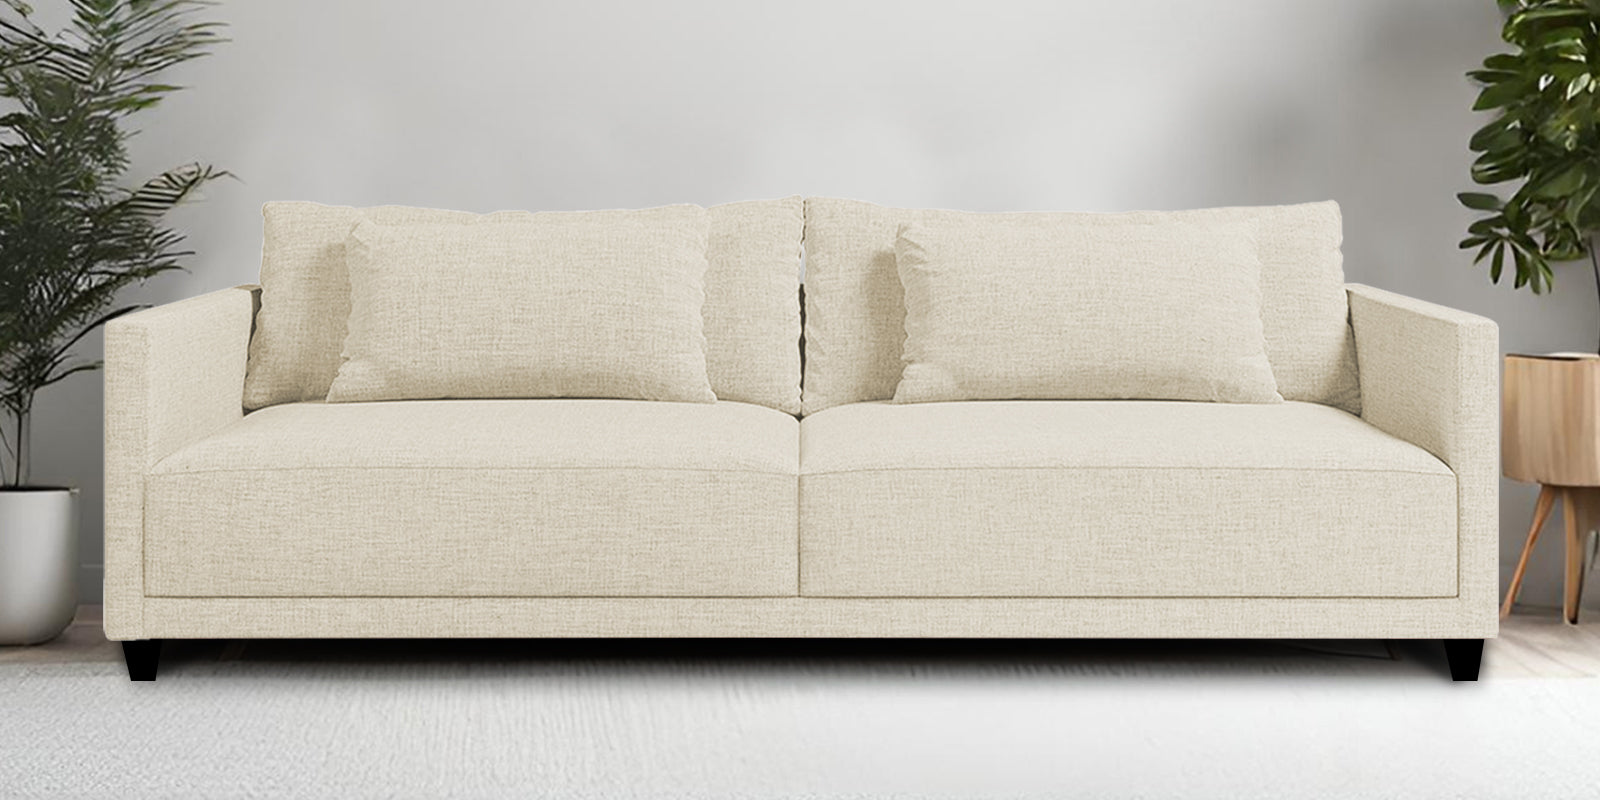 Kera Fabric 3 Seater Sofa in Ivory Cream Colour